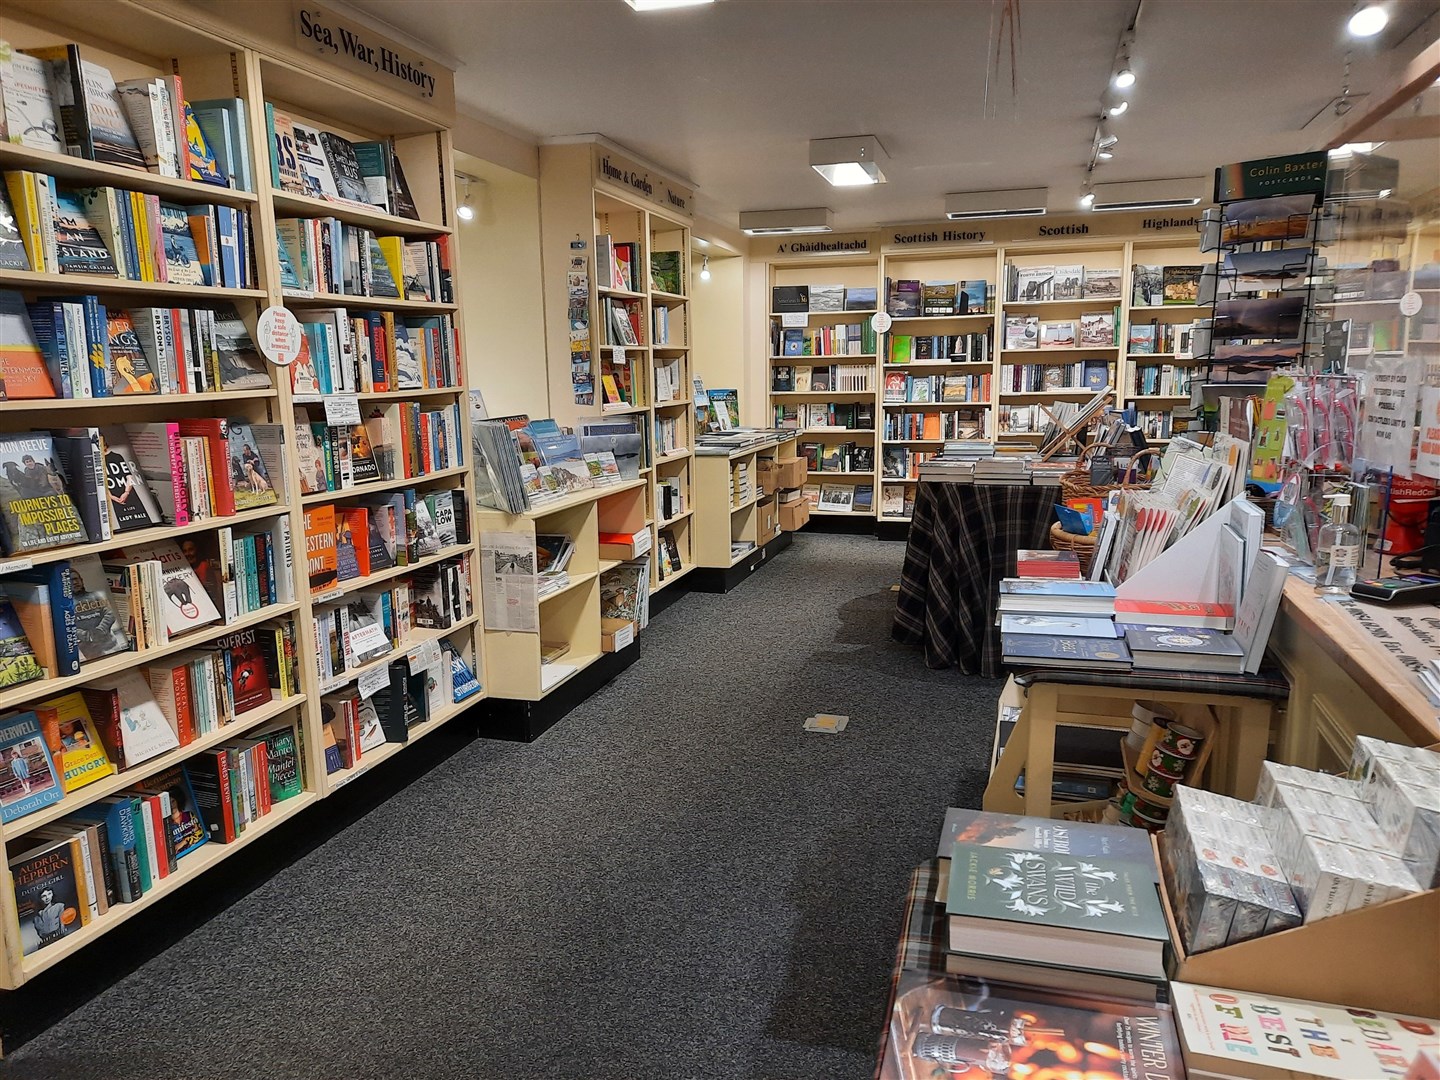 Ullapool Bookshop